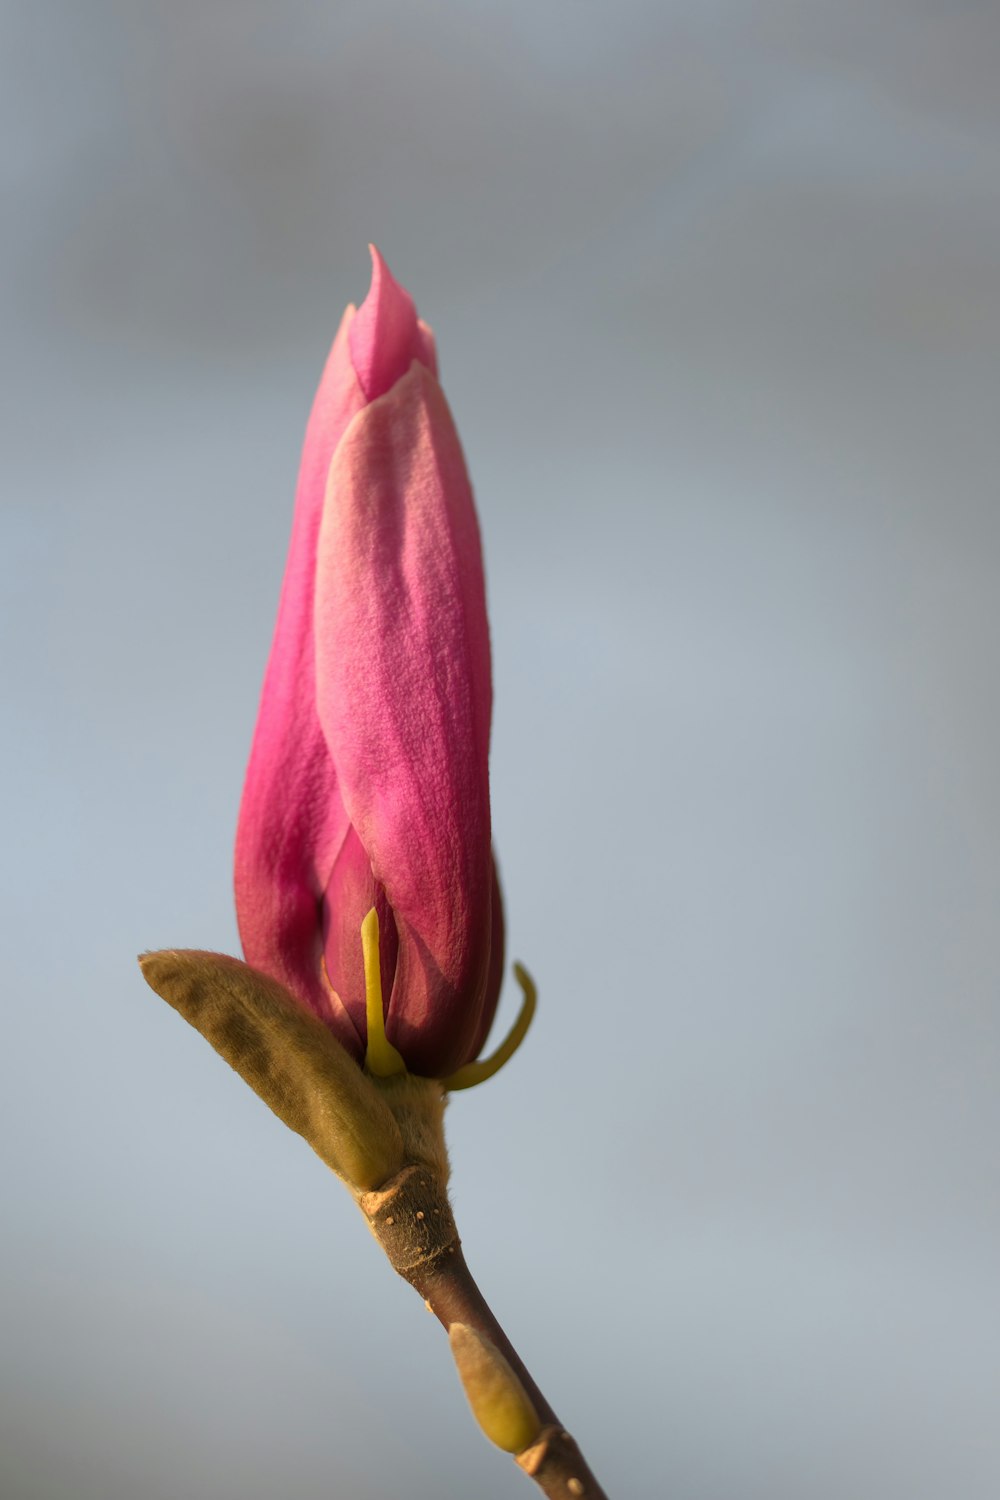 a single pink flower bud on a twig